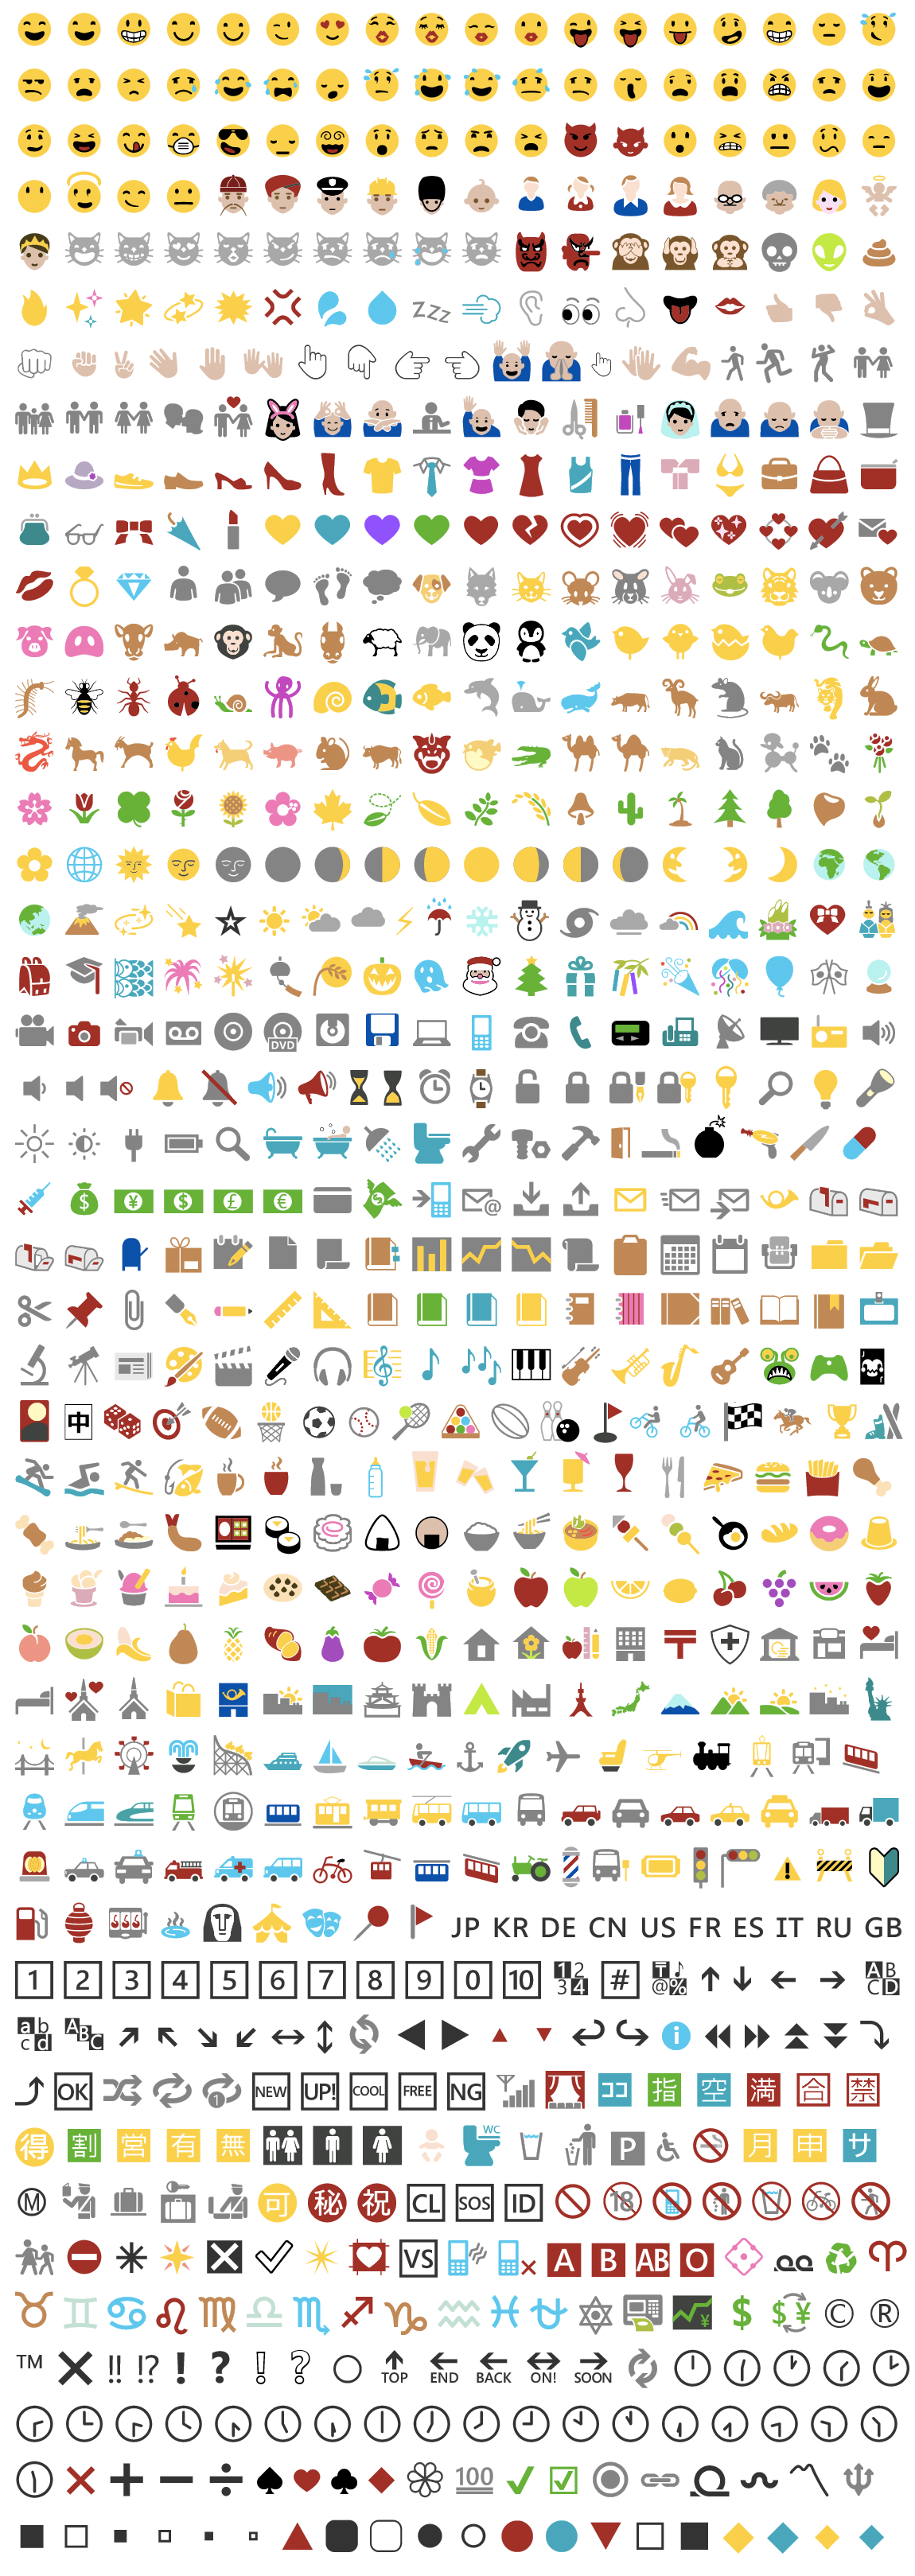 emoji download for pc